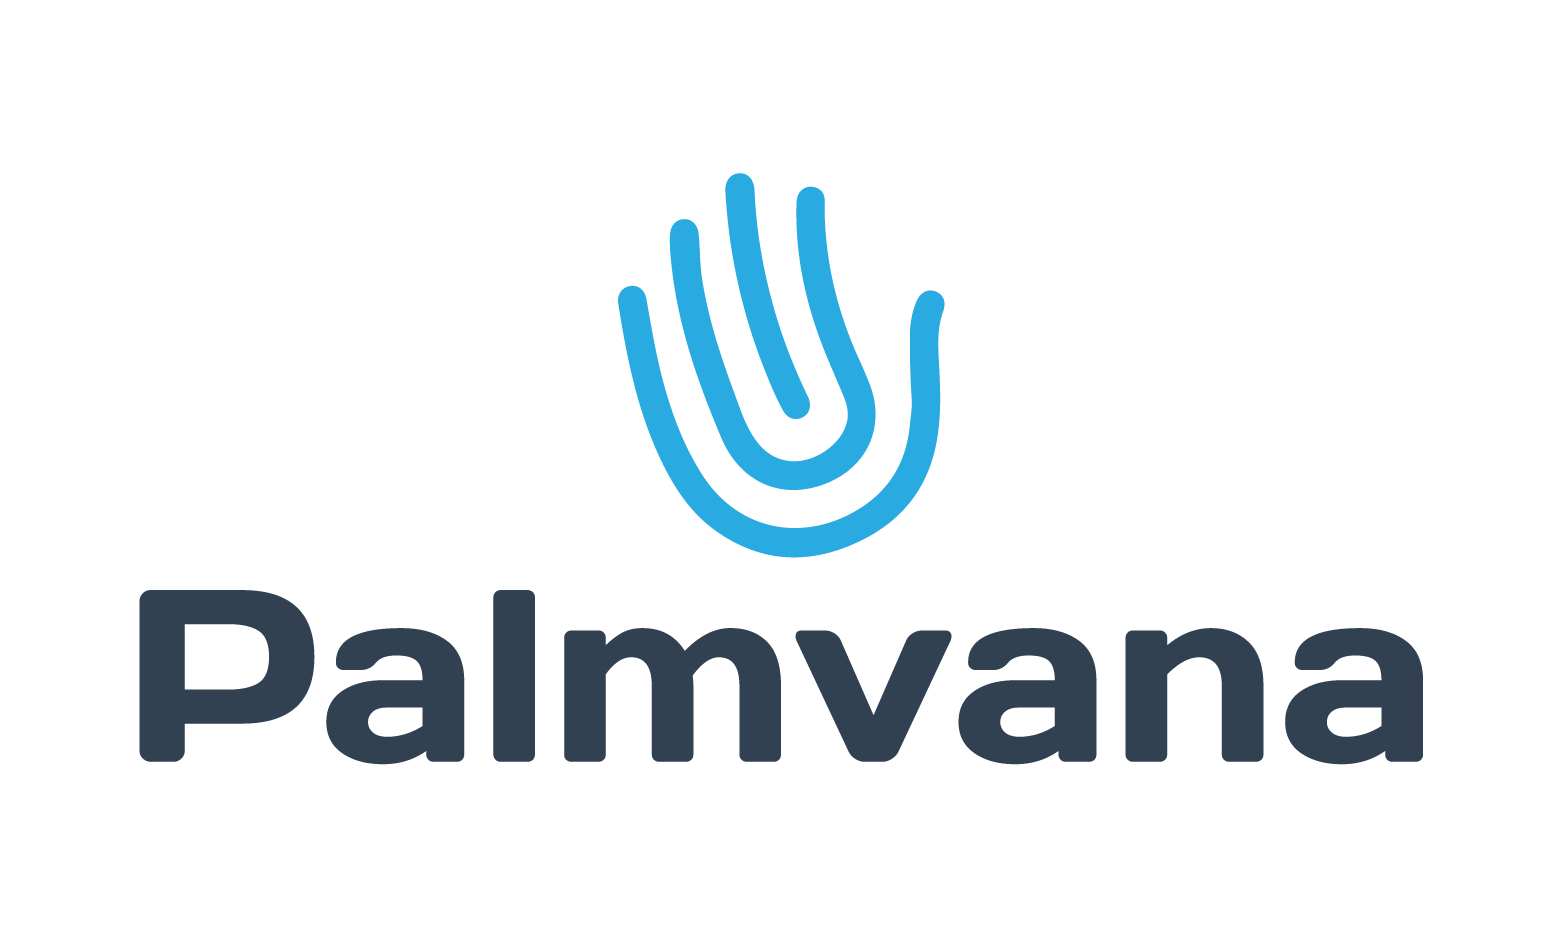 Palmvana.com - Creative brandable domain for sale